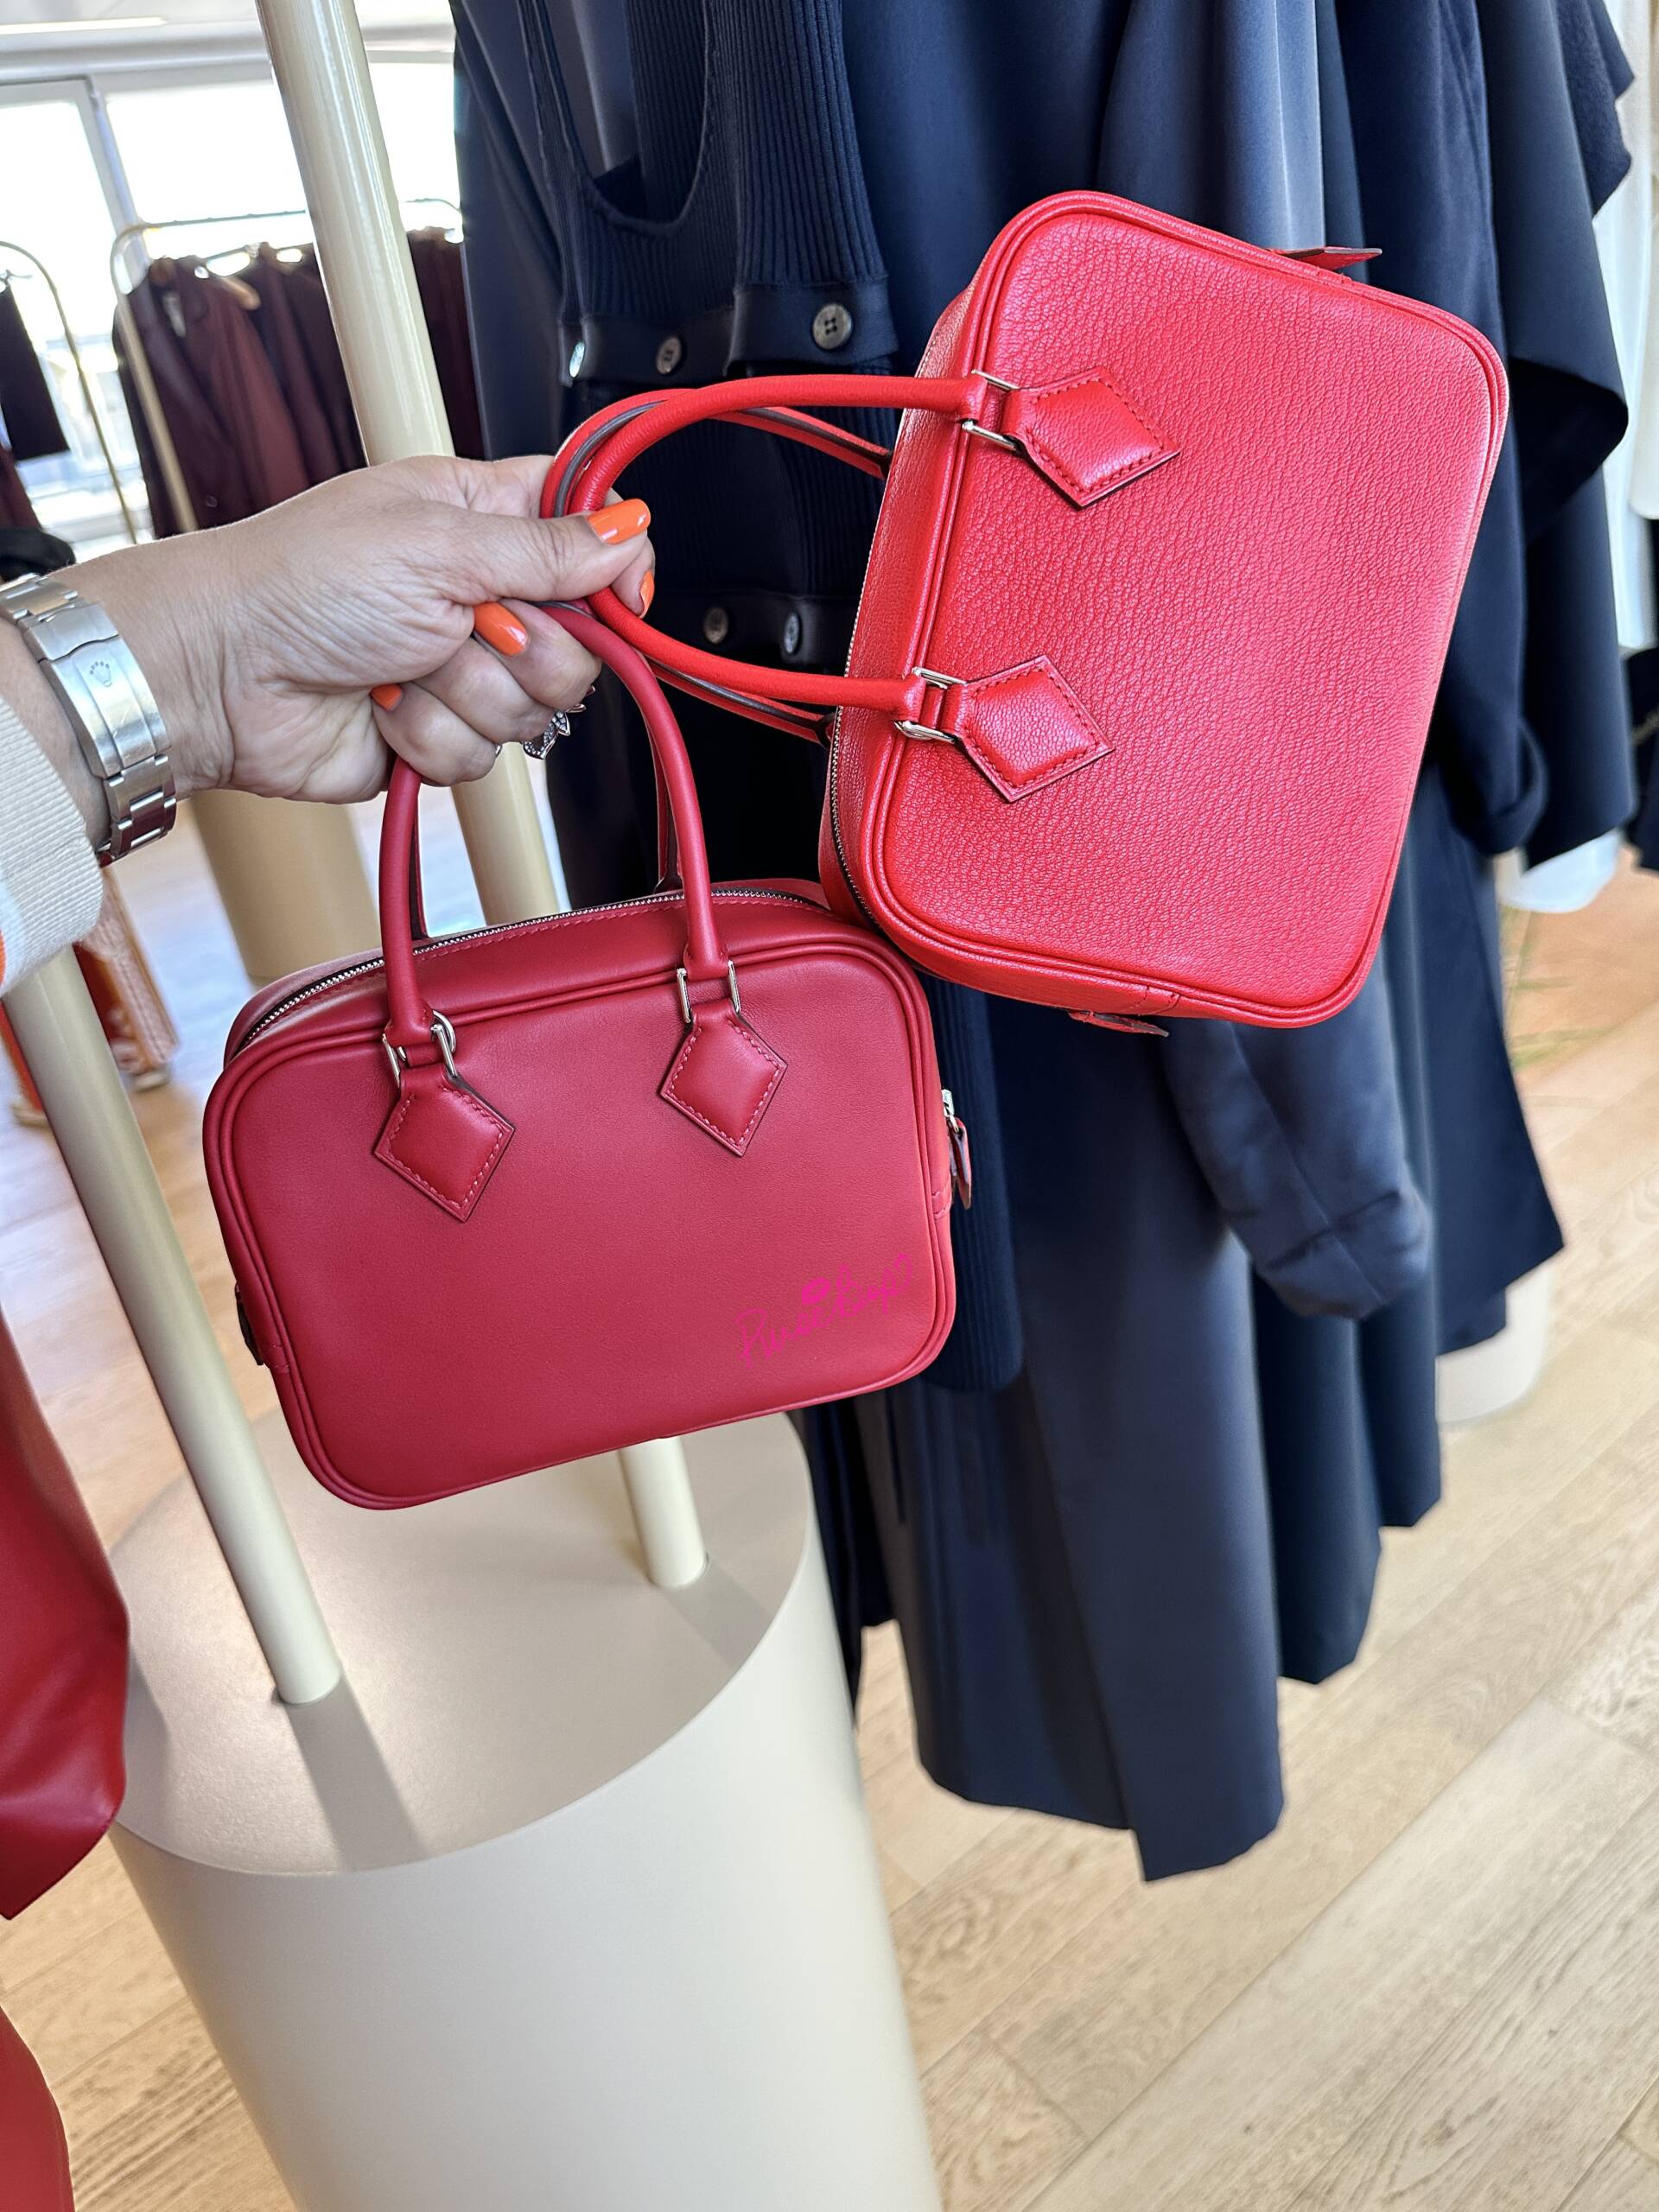 Hermès Spring/Summer 2021 Introduces New Bag Styles - PurseBop